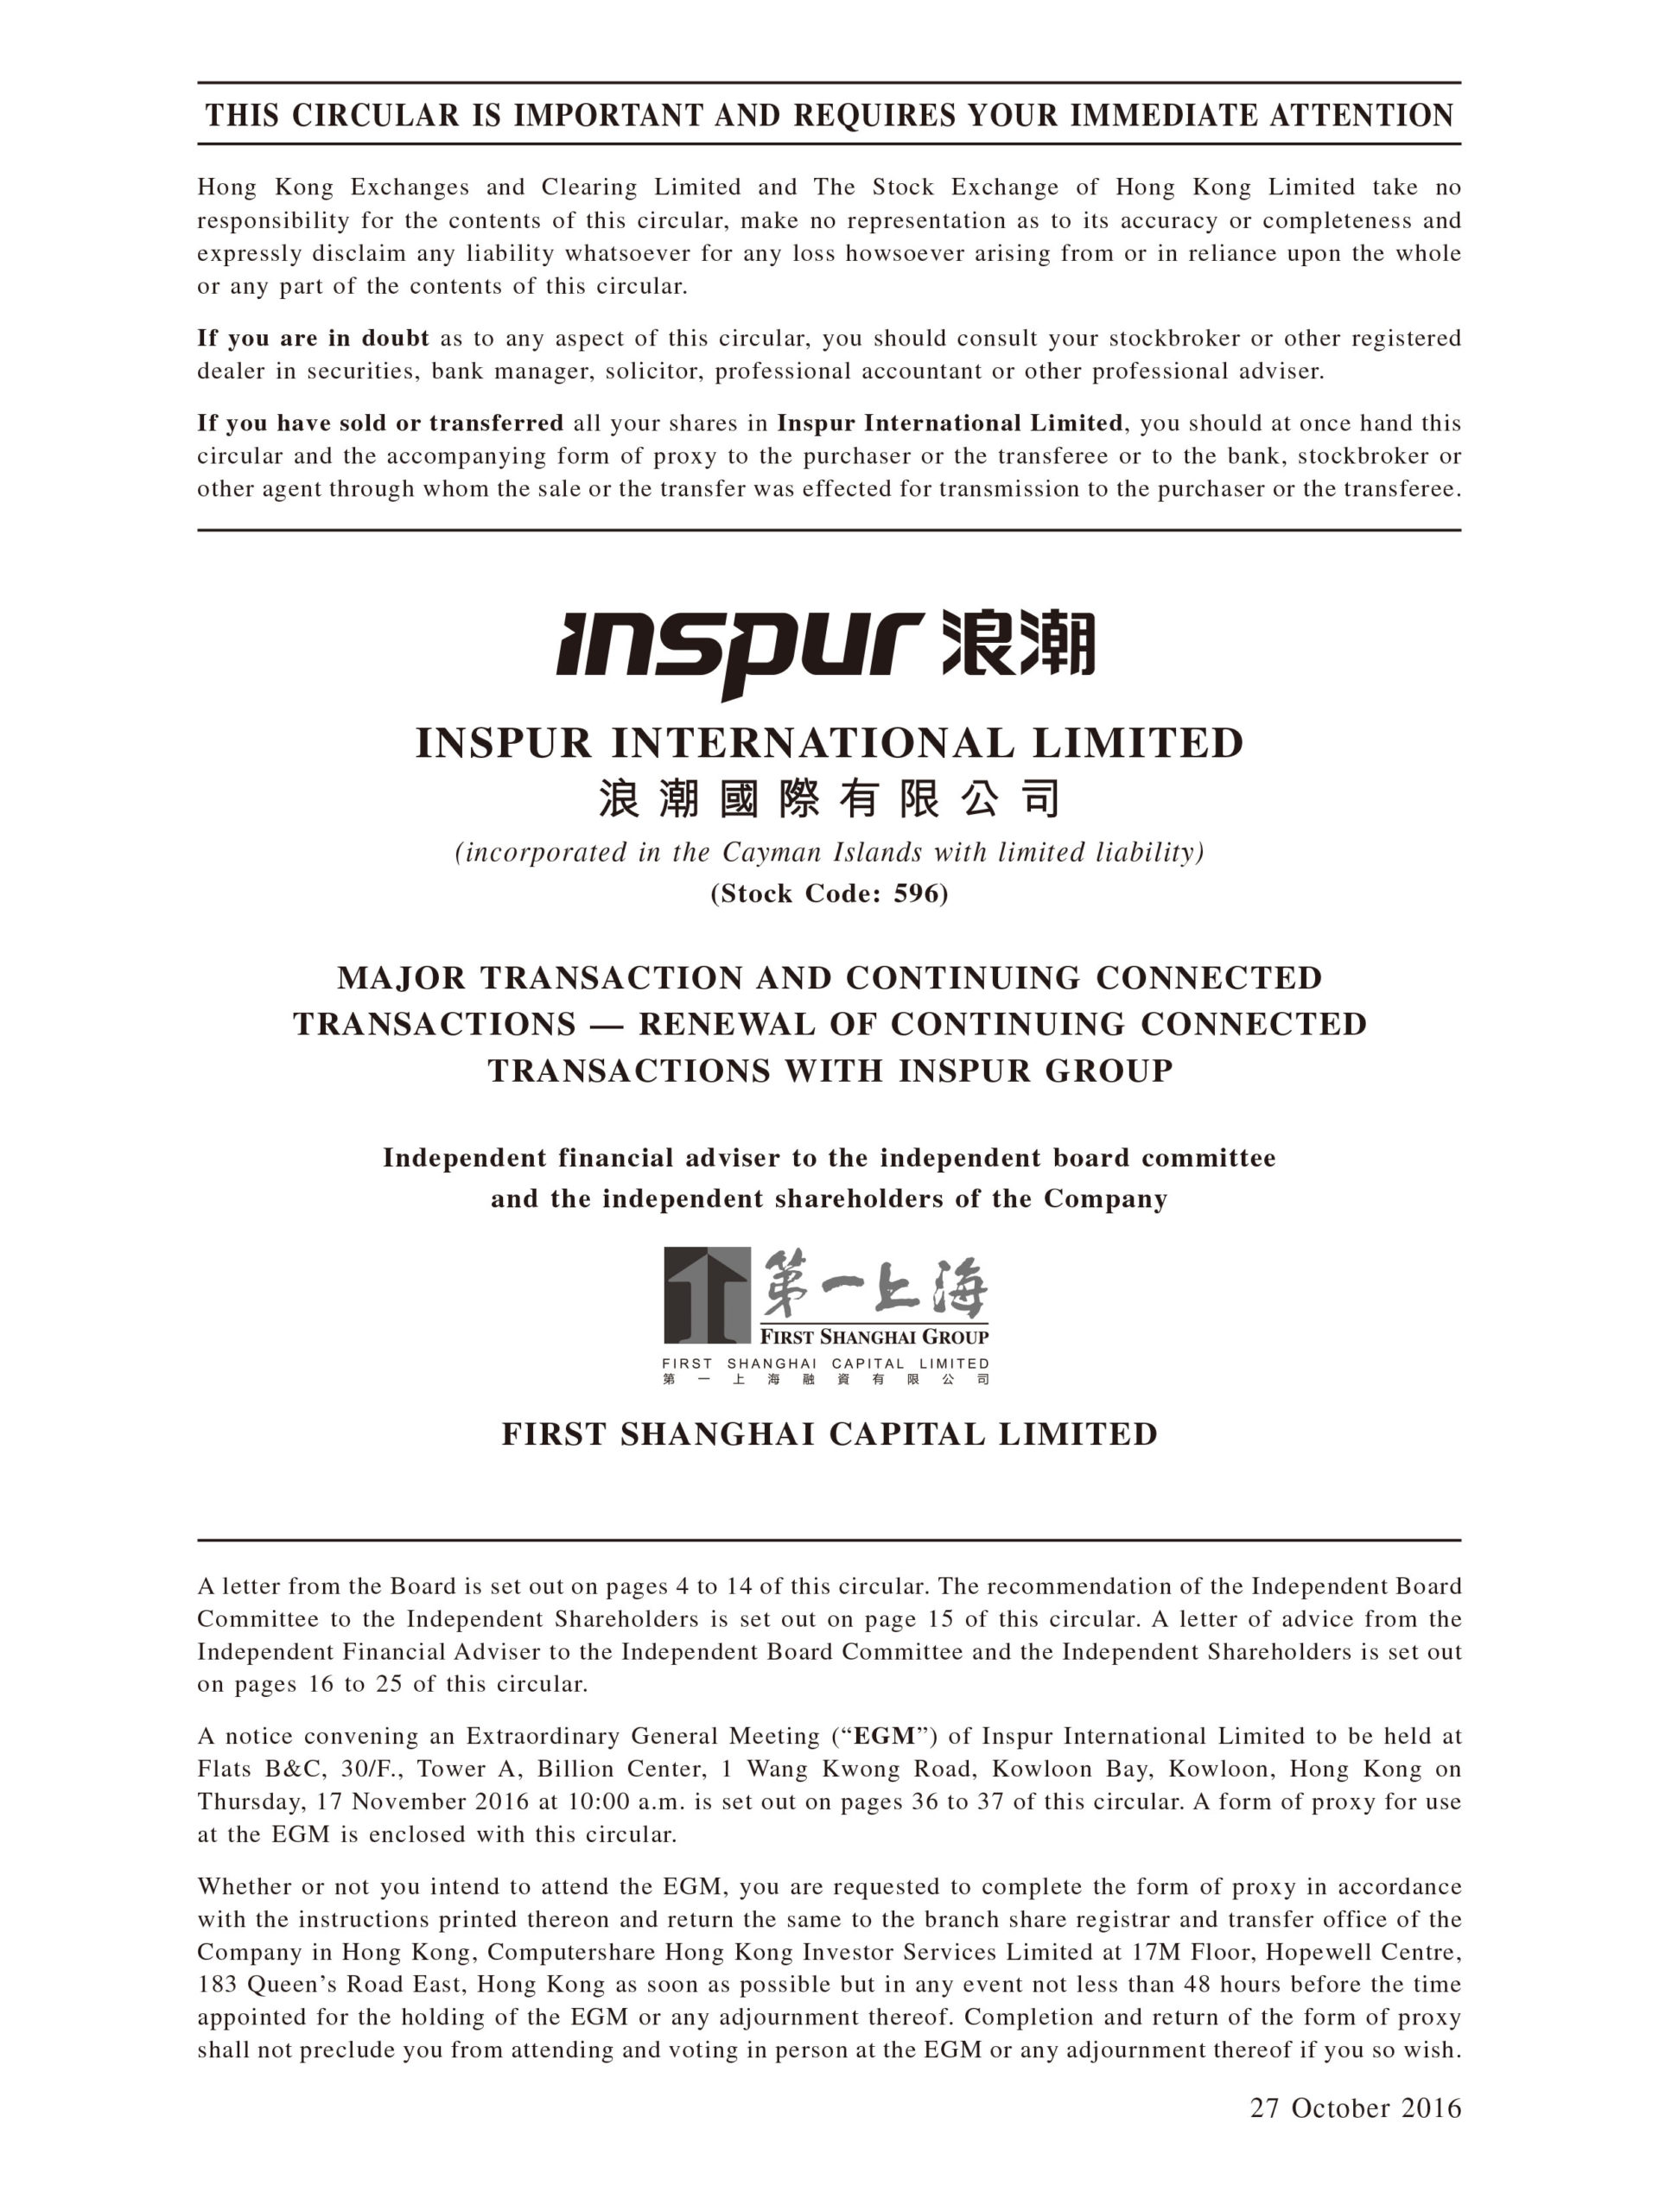 Inspur International Limited